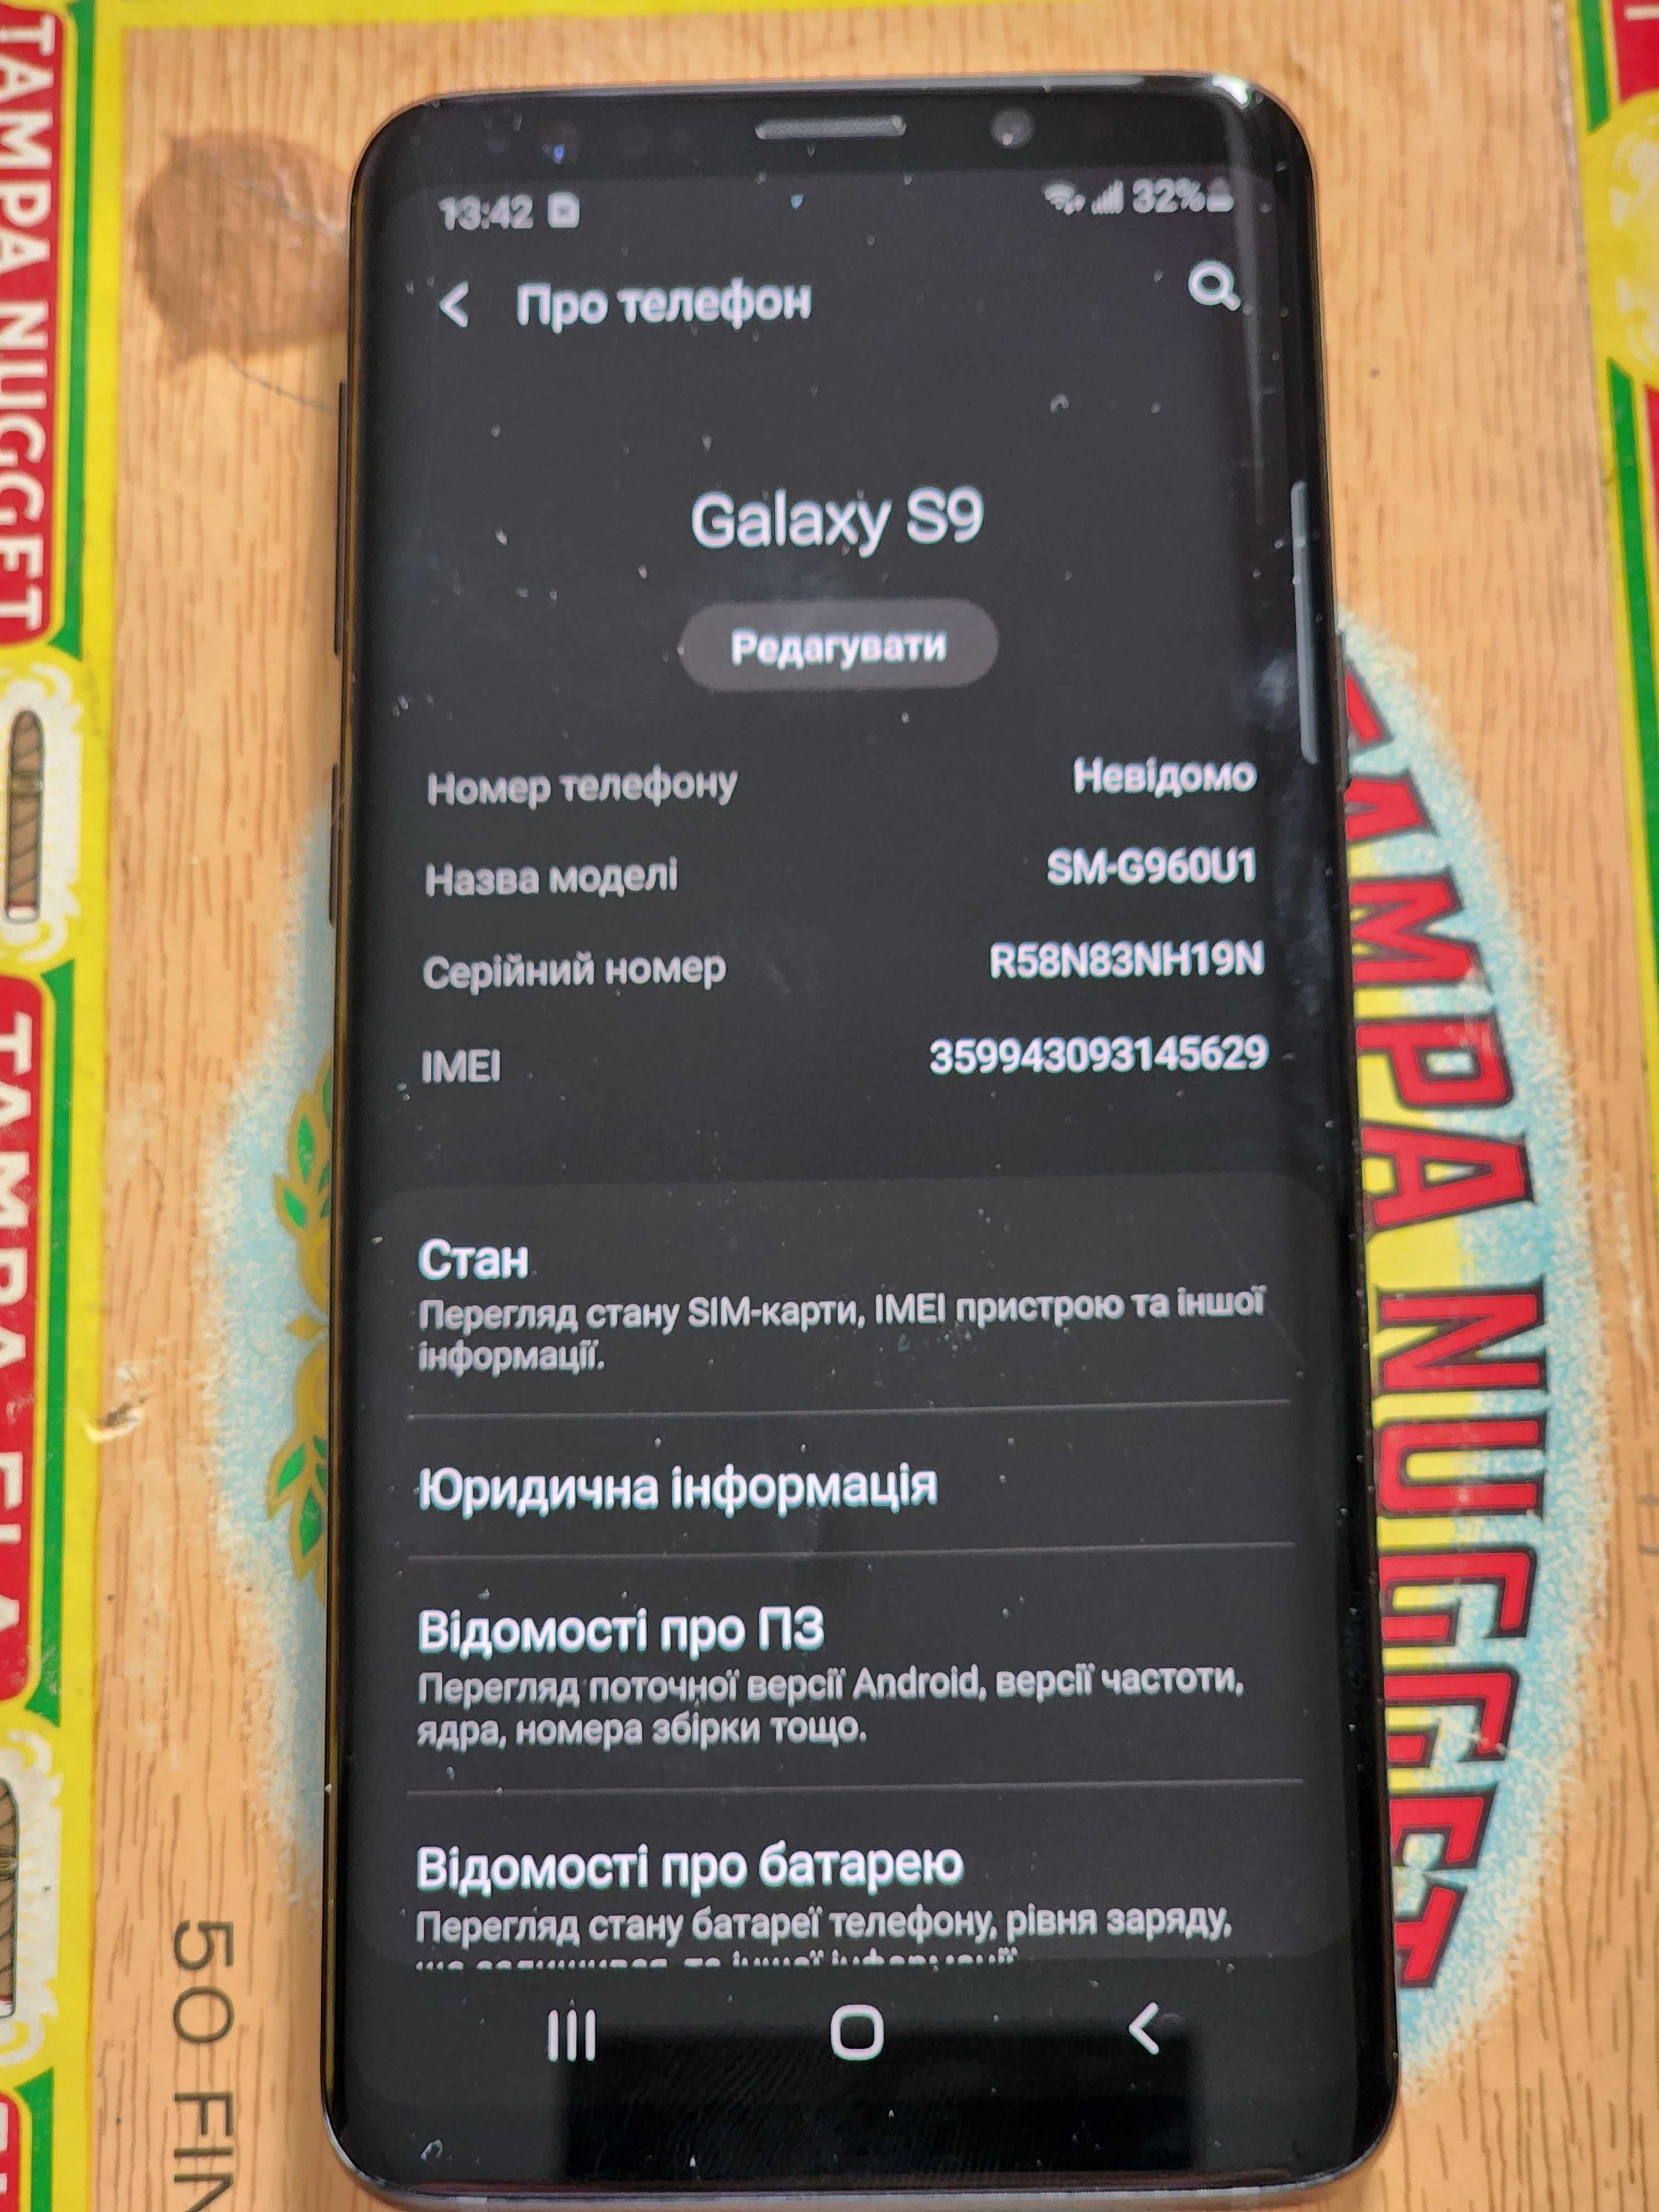 Samsung Galaxy S9 64Gb G960U1 Black